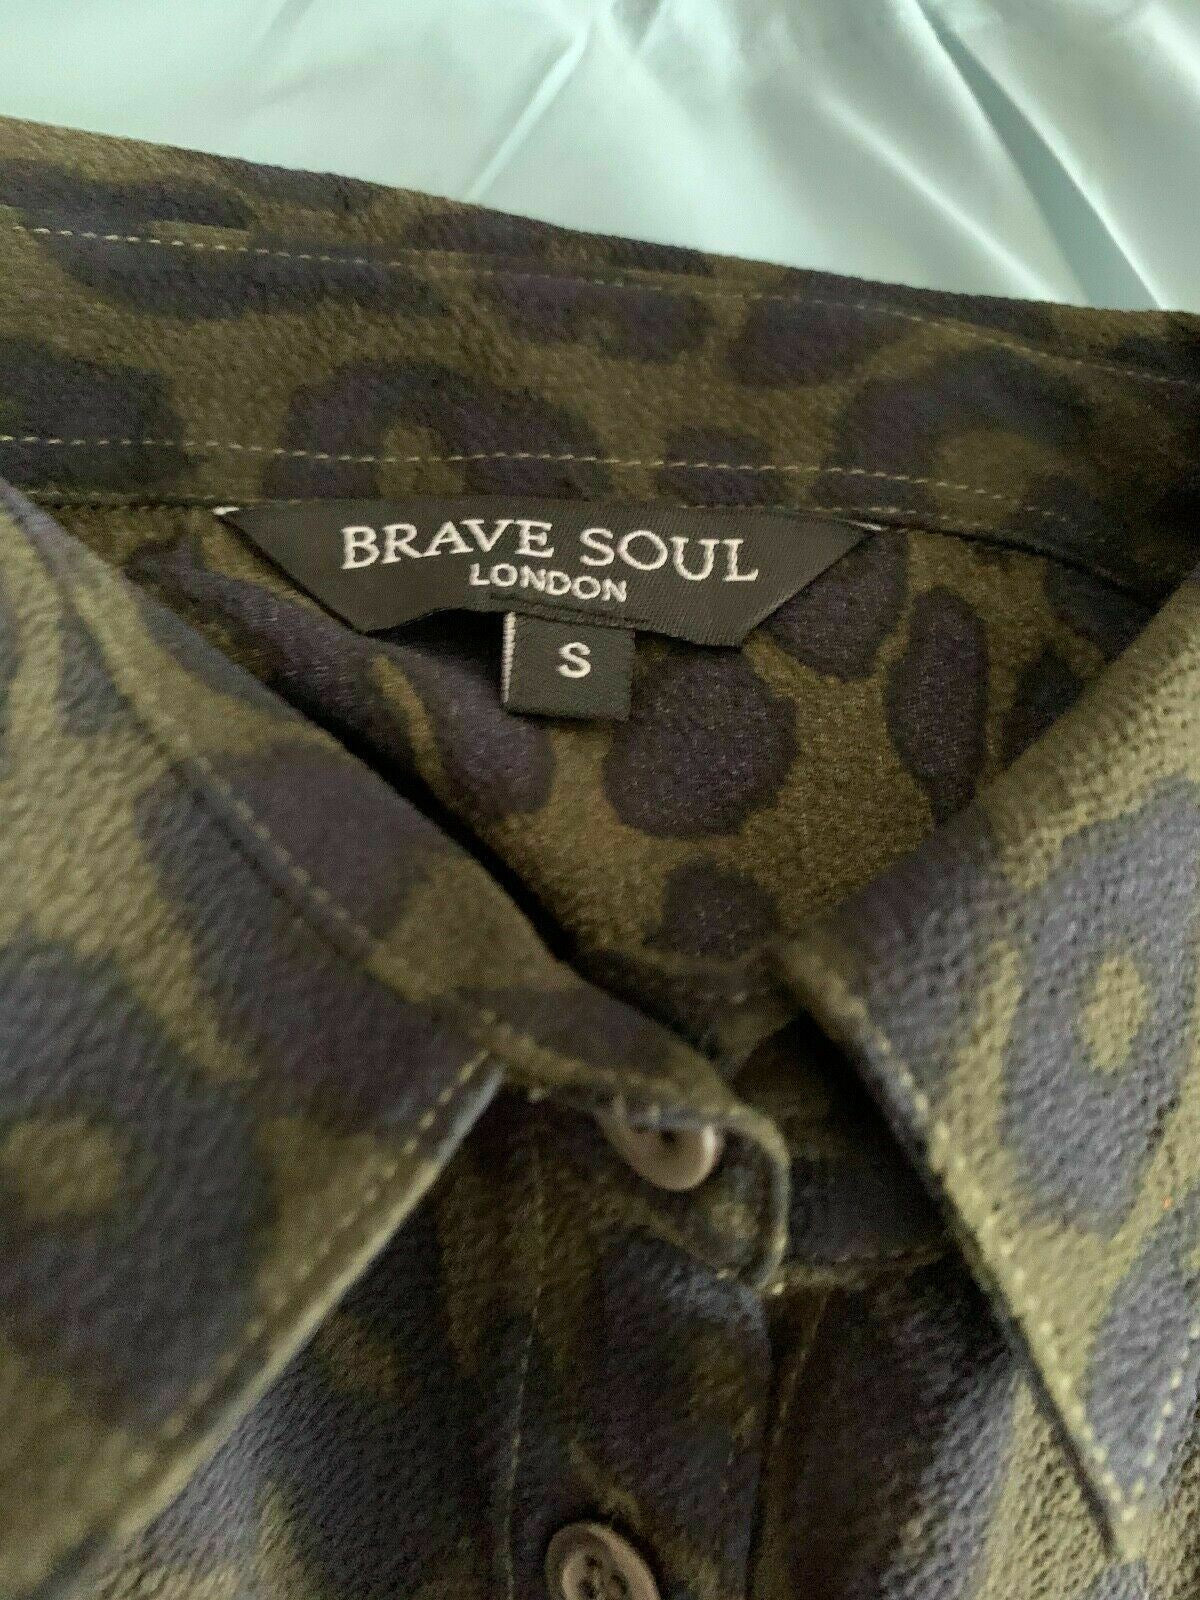 Brave Soul Animal Print Shirt size S Tie Front Khaki